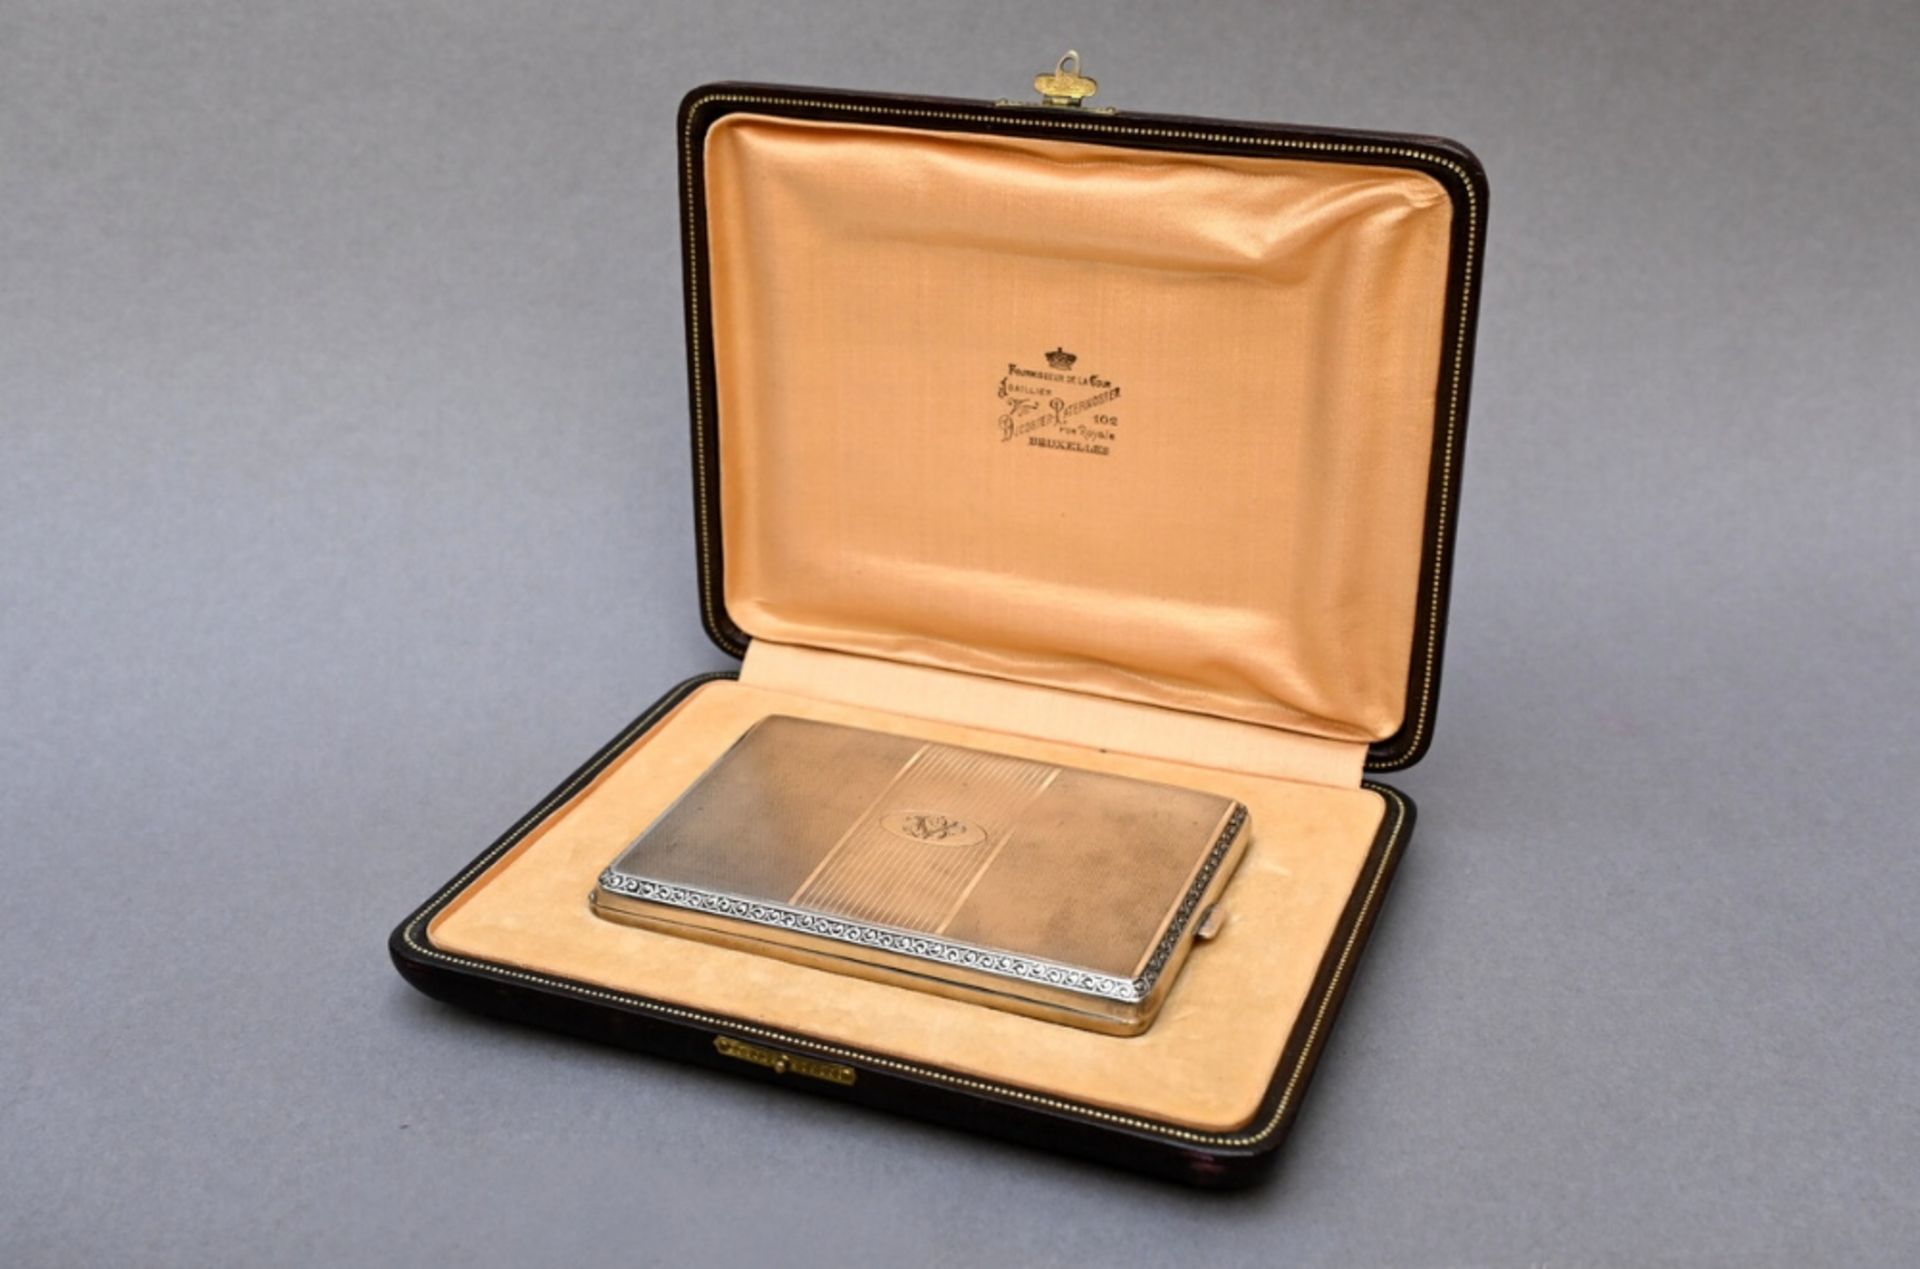 Silver cigarette case with engraving of King Albert I 'Souvenir du voyage Royal au Congo 1928' (